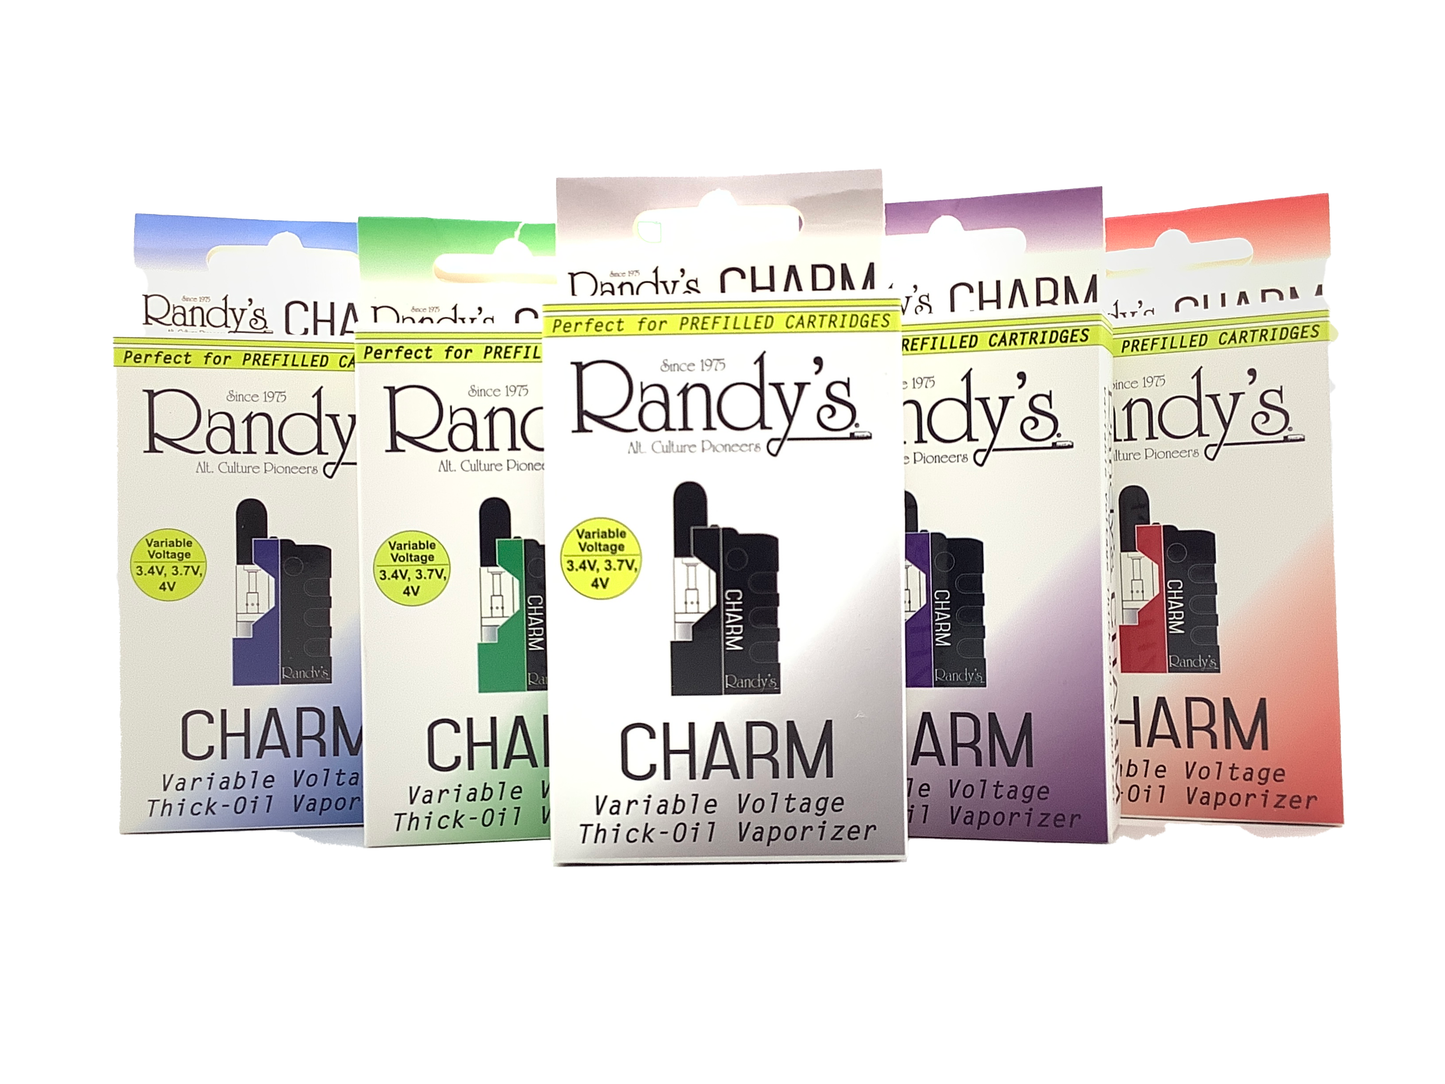 Randy's Charm